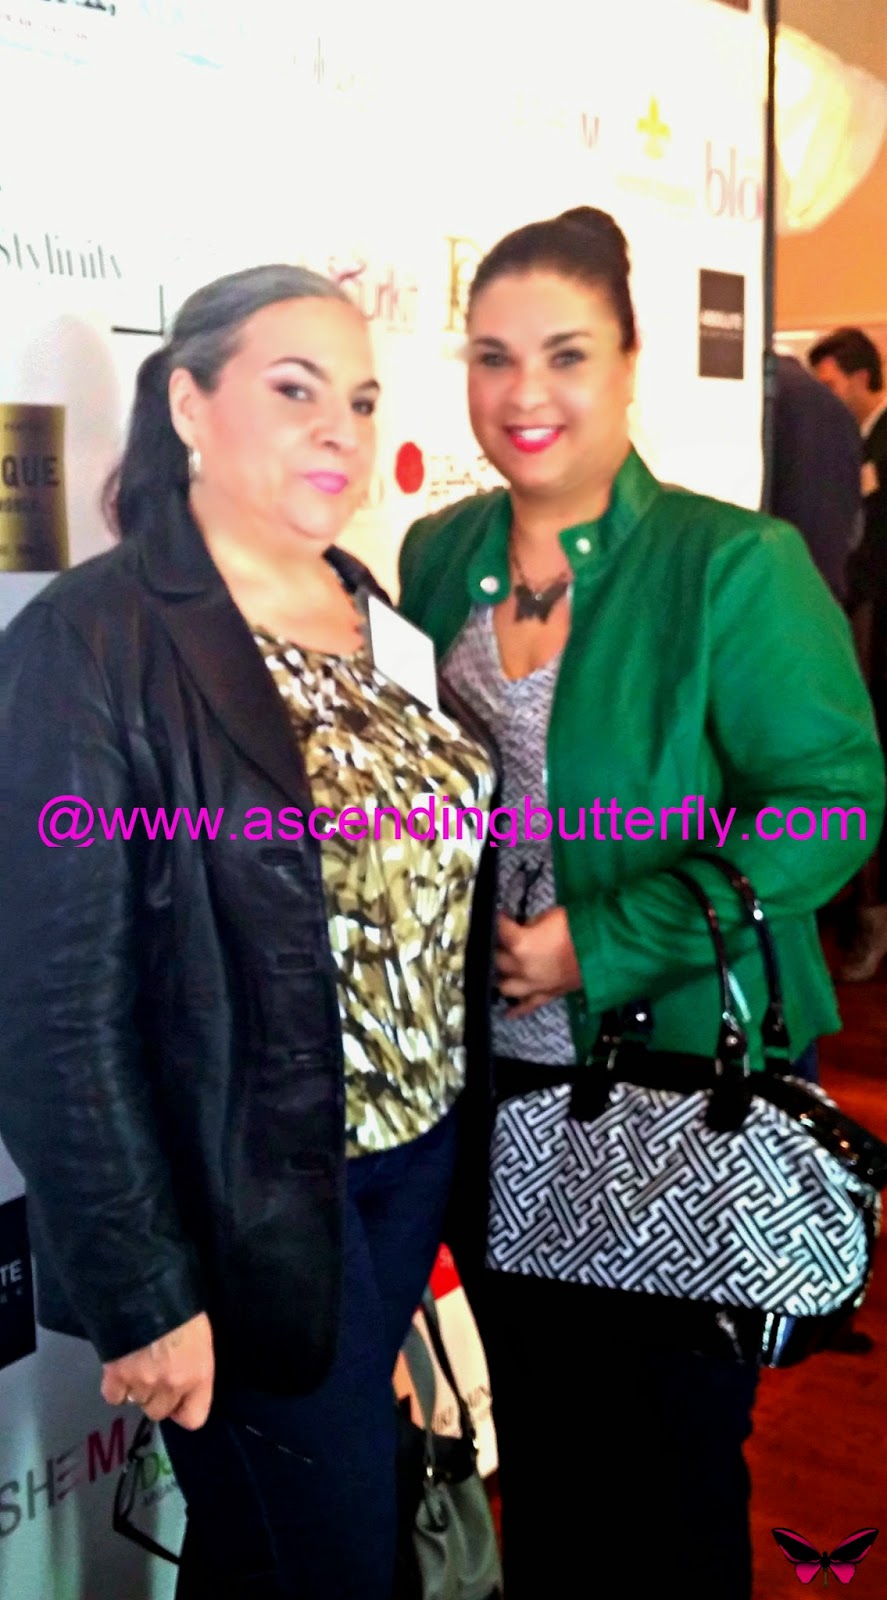 Ascending Butterfly attends BeautyPress Spotlight Day February 2014